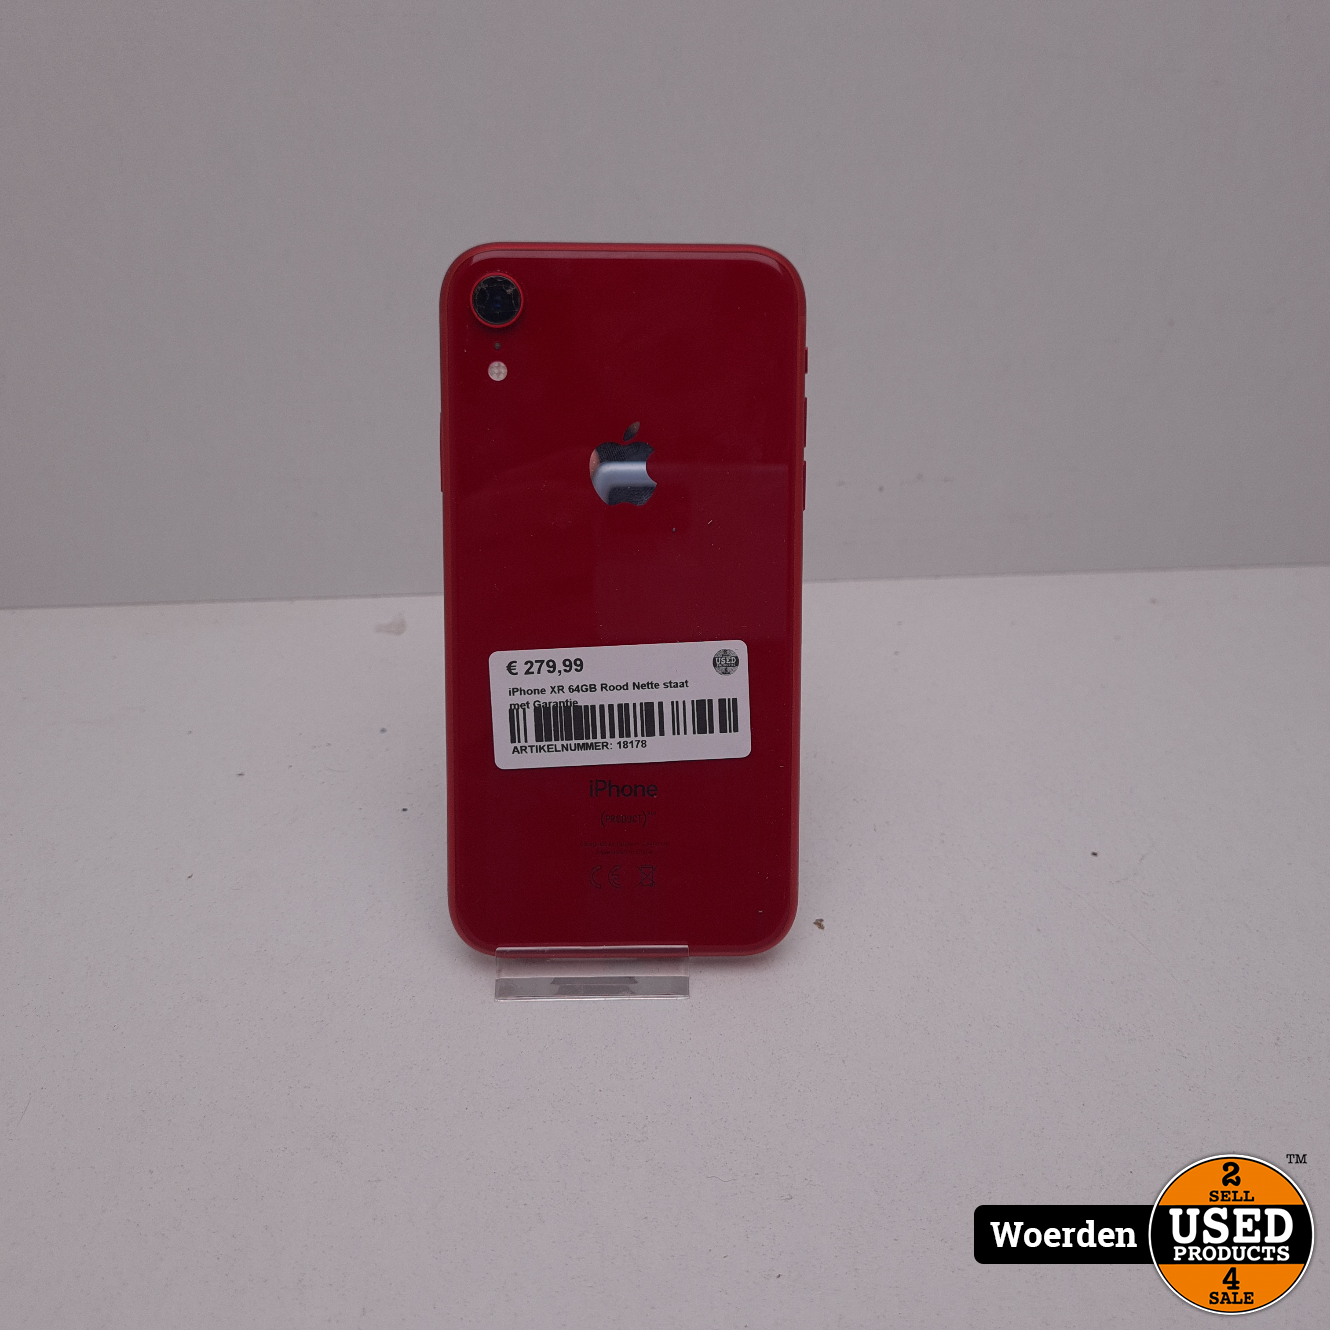 sticker Touhou vinger iPhone XR 64GB Rood Nette staat met Garantie - Used Products Woerden